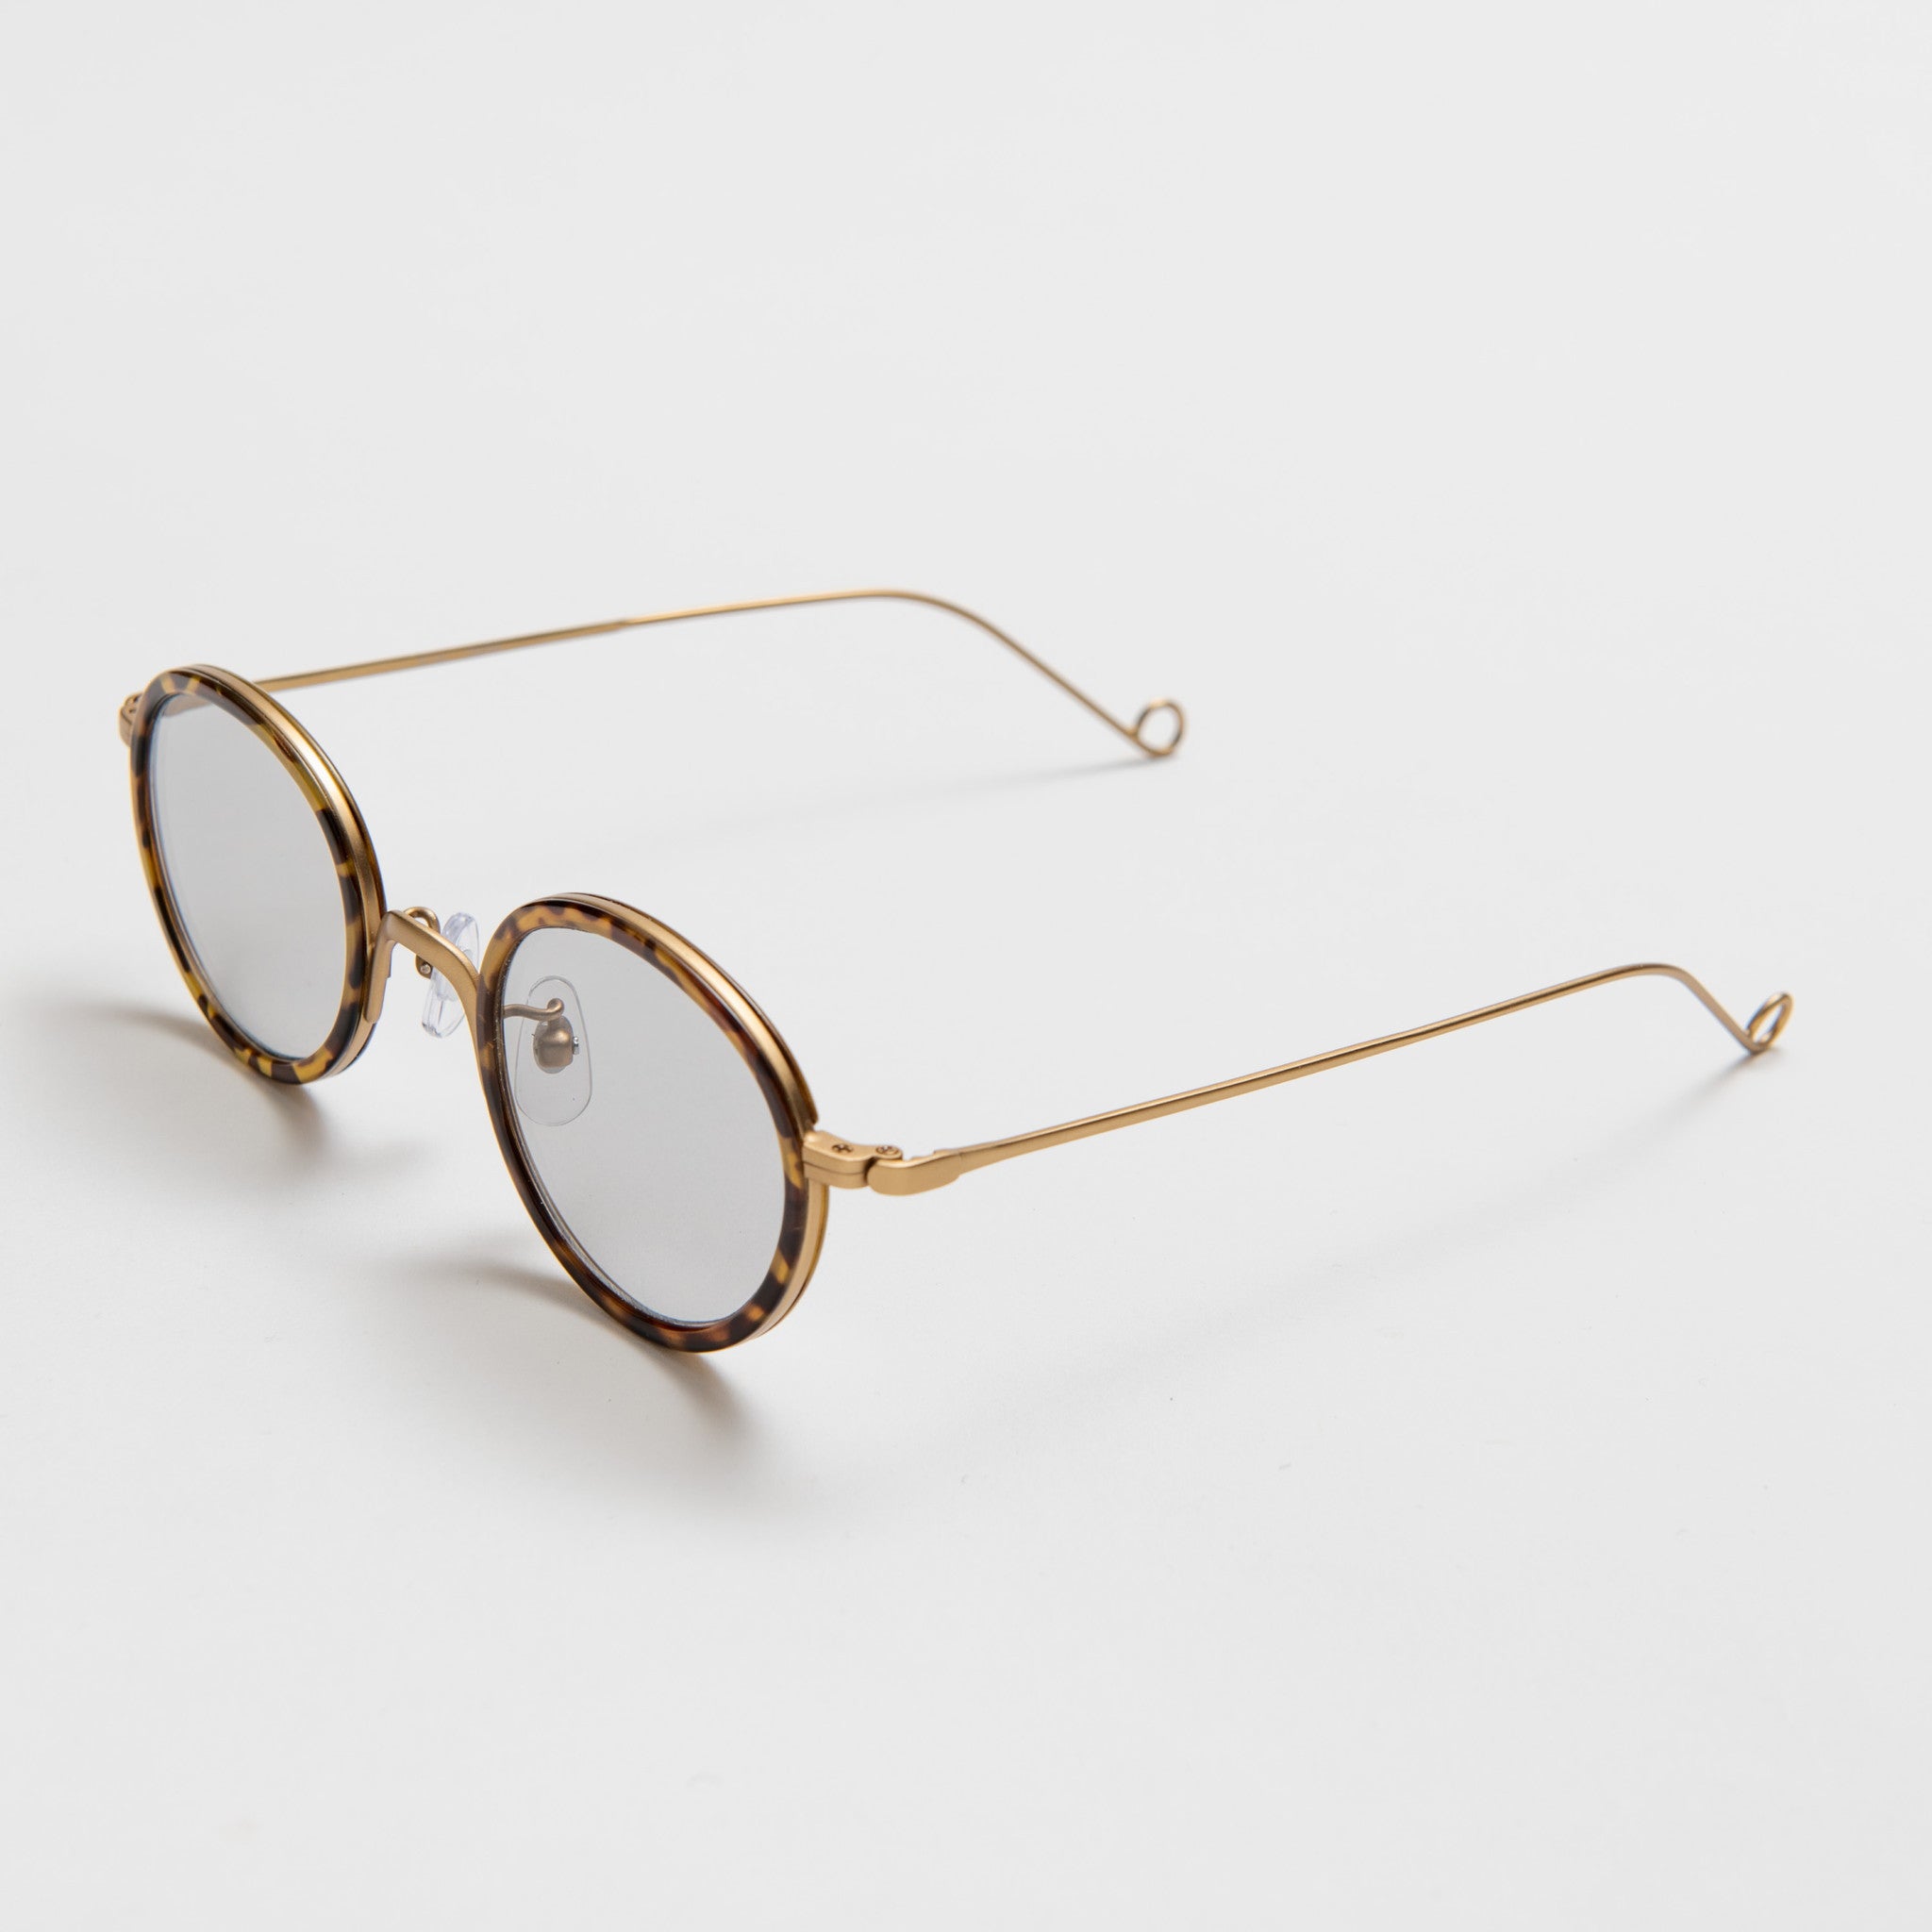 【Ciqi】HERBIE サングラス Vintage Brown Light Gray Lens Sunglasses(ハービー ビンテージブラウン ライトグレーレンズ)